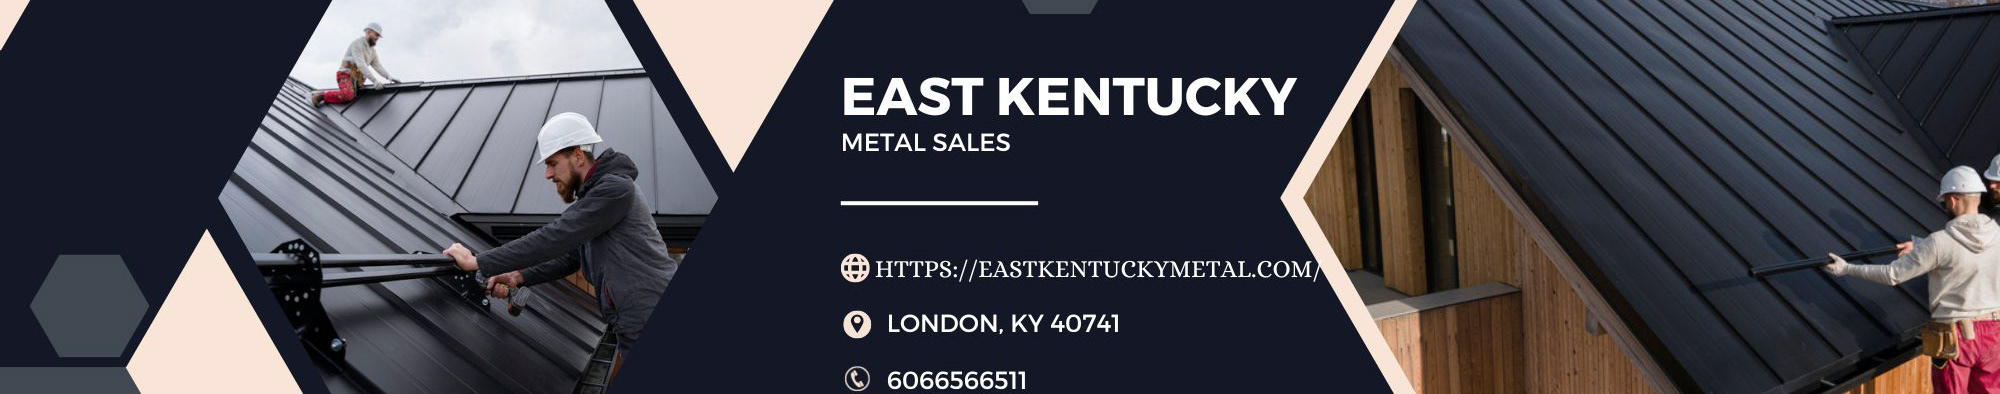 East Kentucky's profile banner